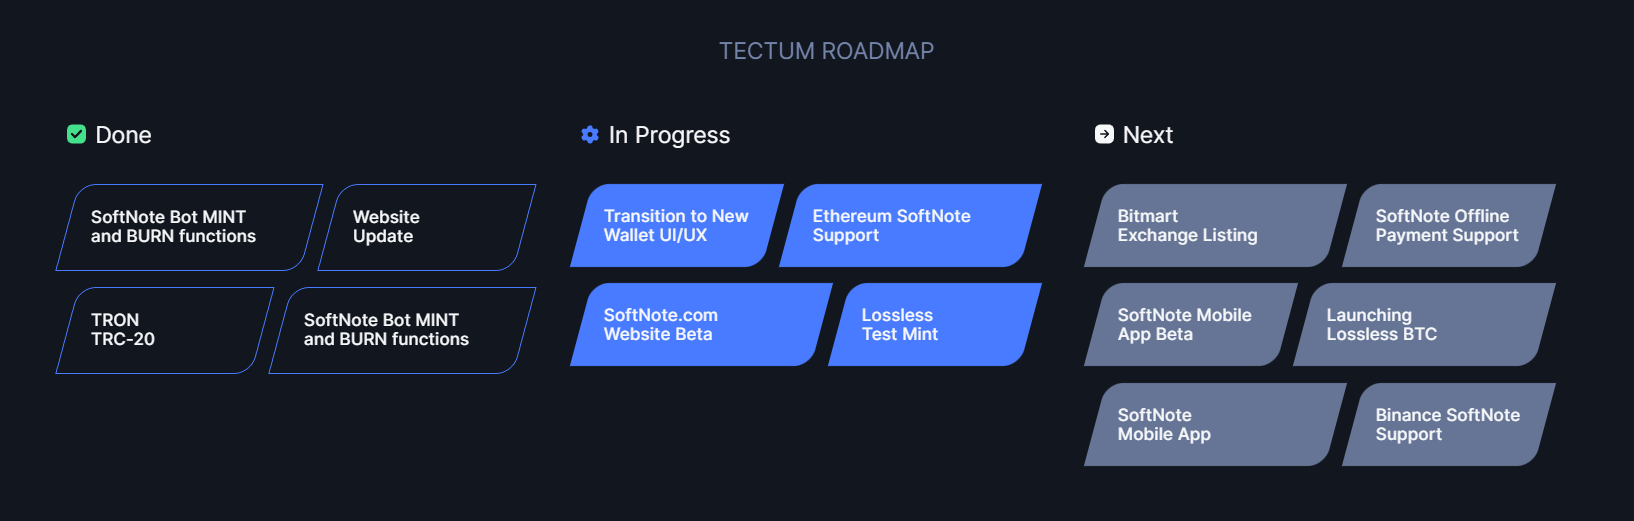 Tectum Roadmap